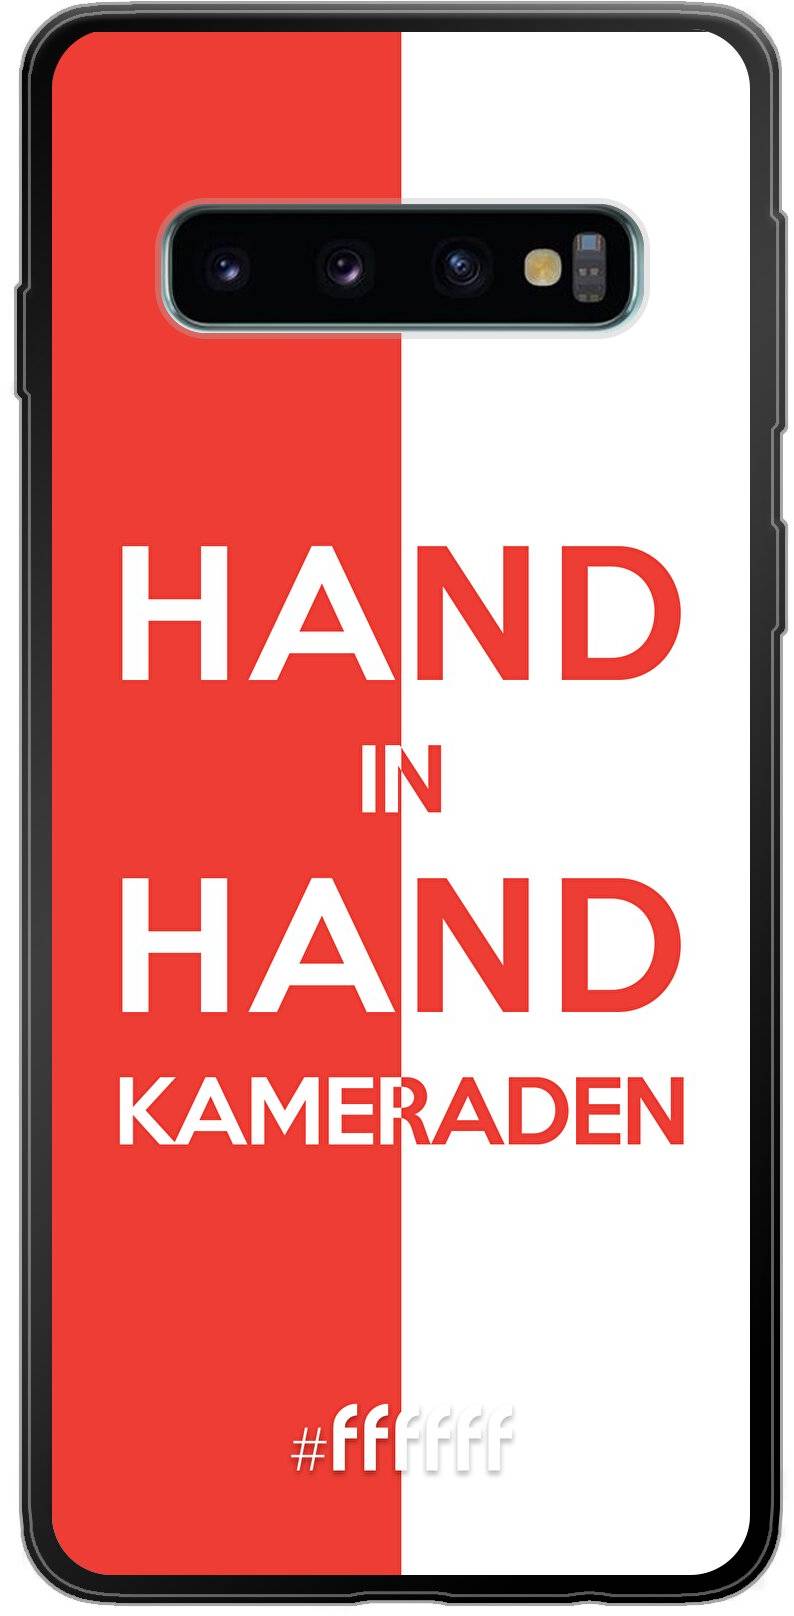 Feyenoord - Hand in hand, kameraden Galaxy S10